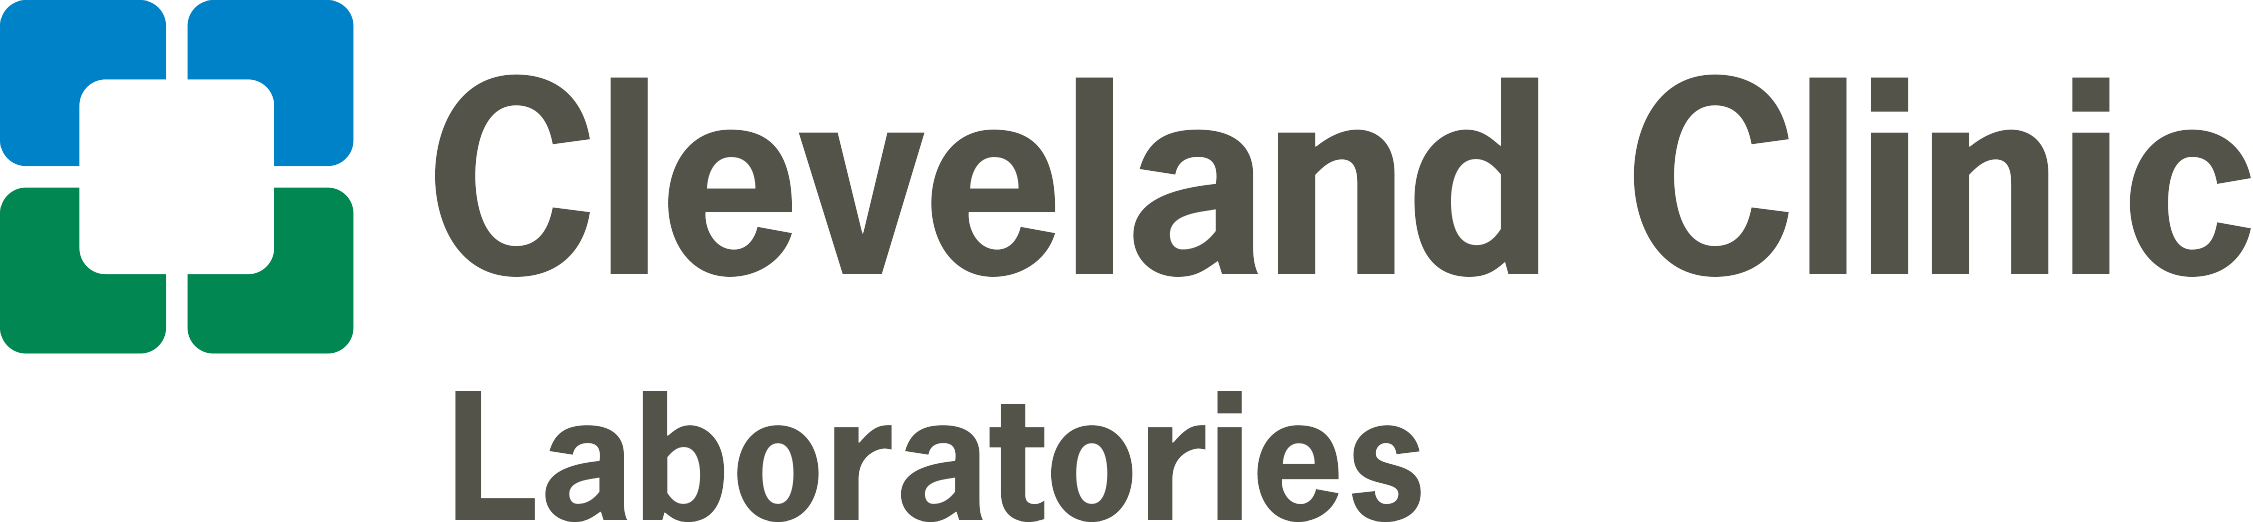 Cleveland Clinic Laboratories logo